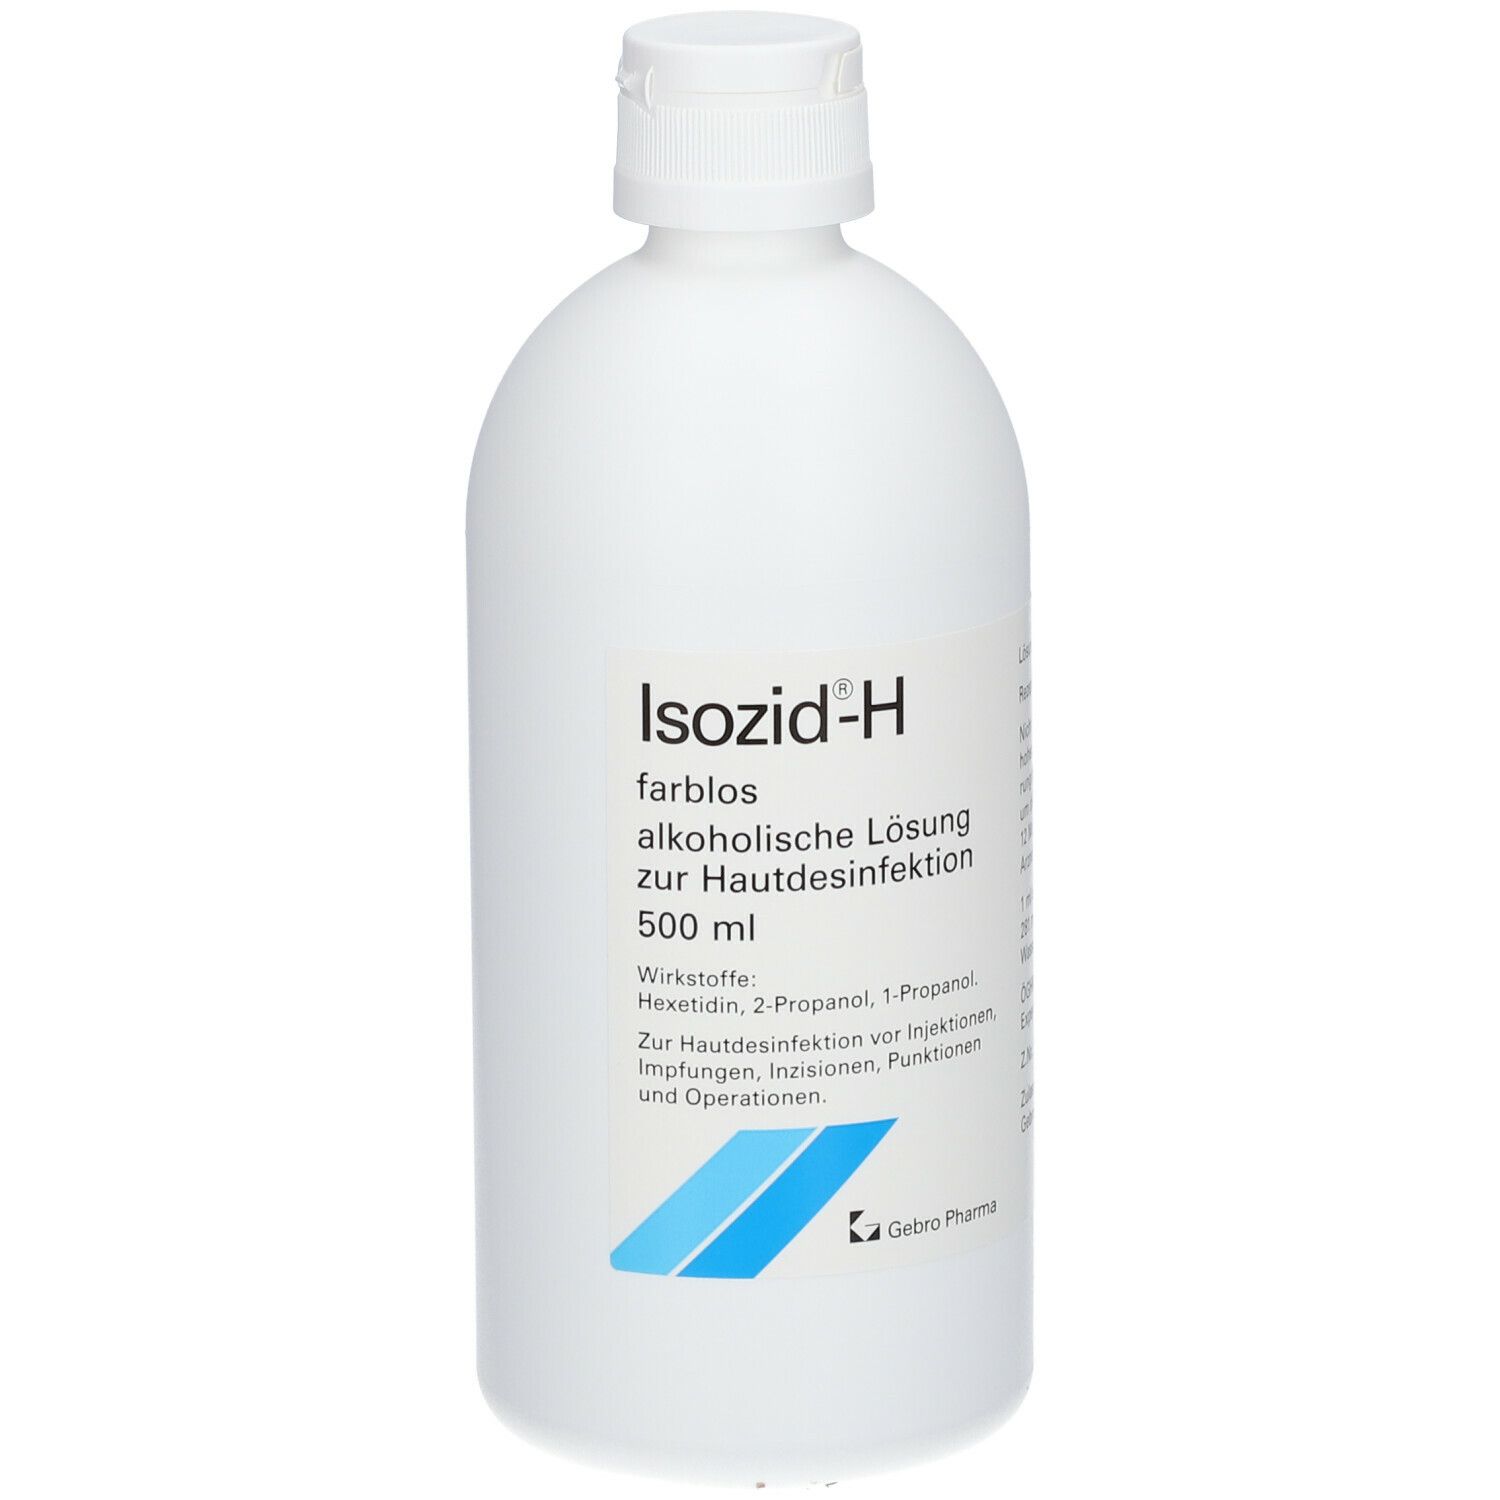 Isozid®-H farblos